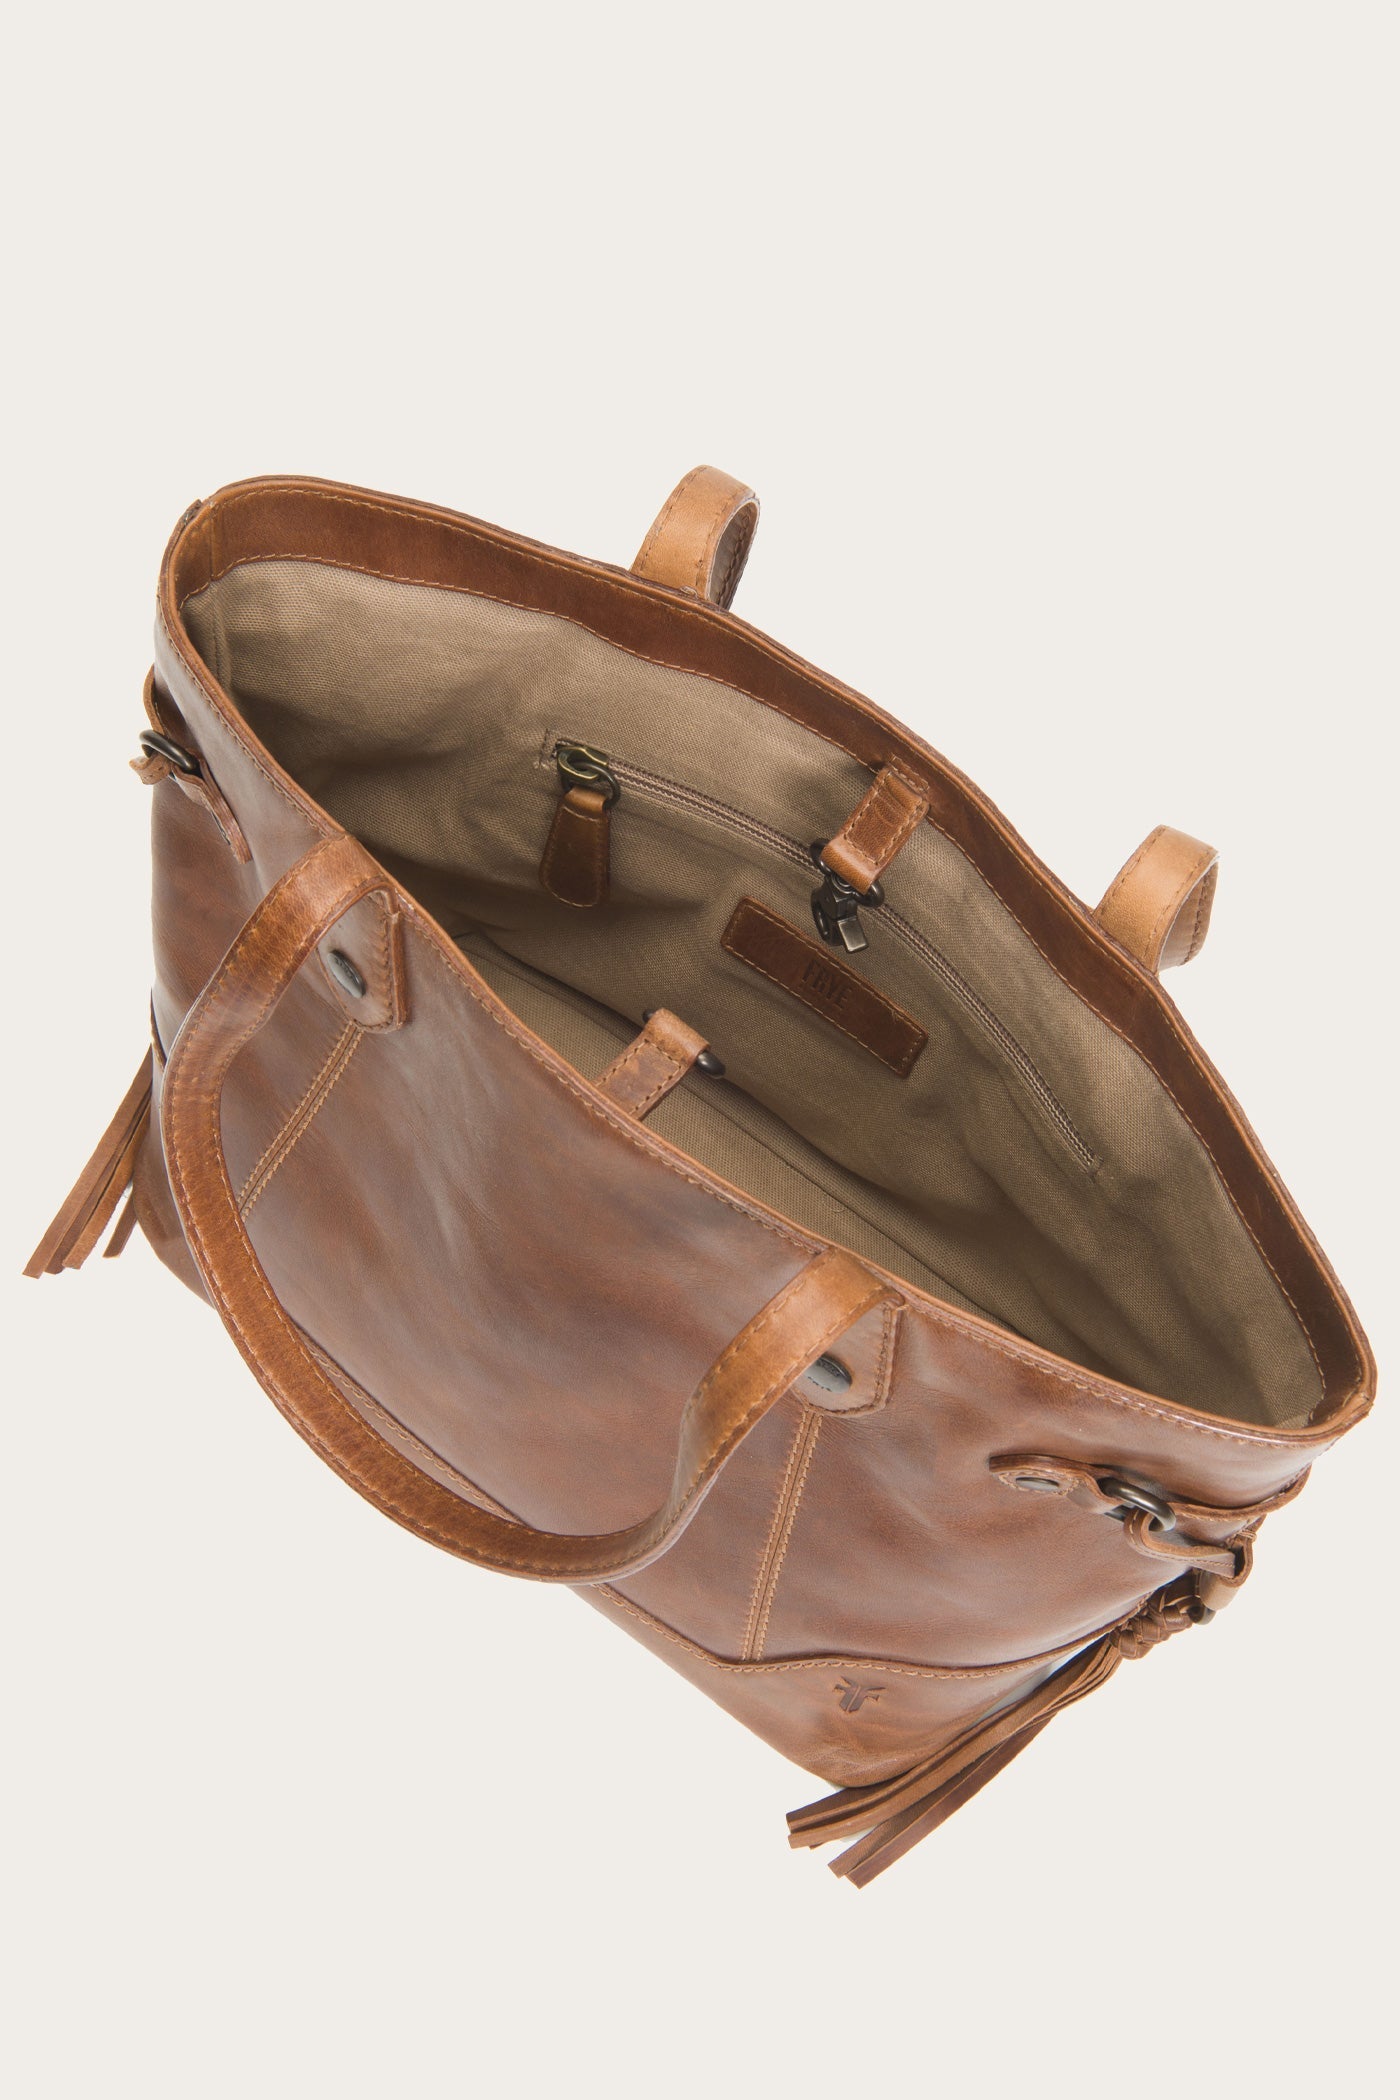 Frye Caelan Satchel Cognac Leather purse Handbag With Extra shoulder Strap  New | eBay